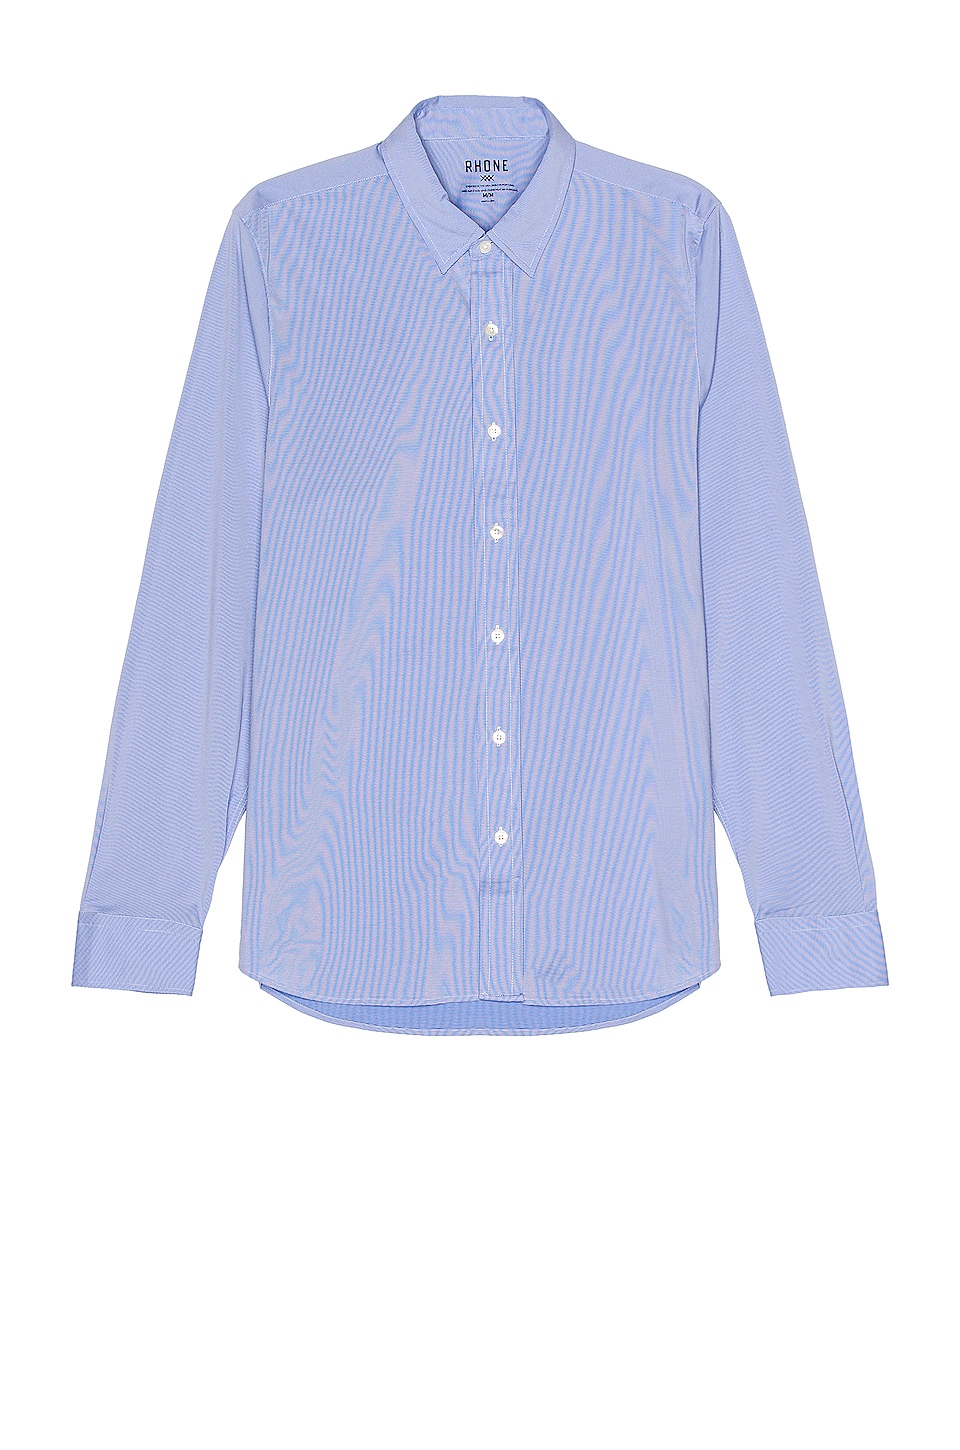 Rhone Commuter Shirt in Blue | REVOLVE